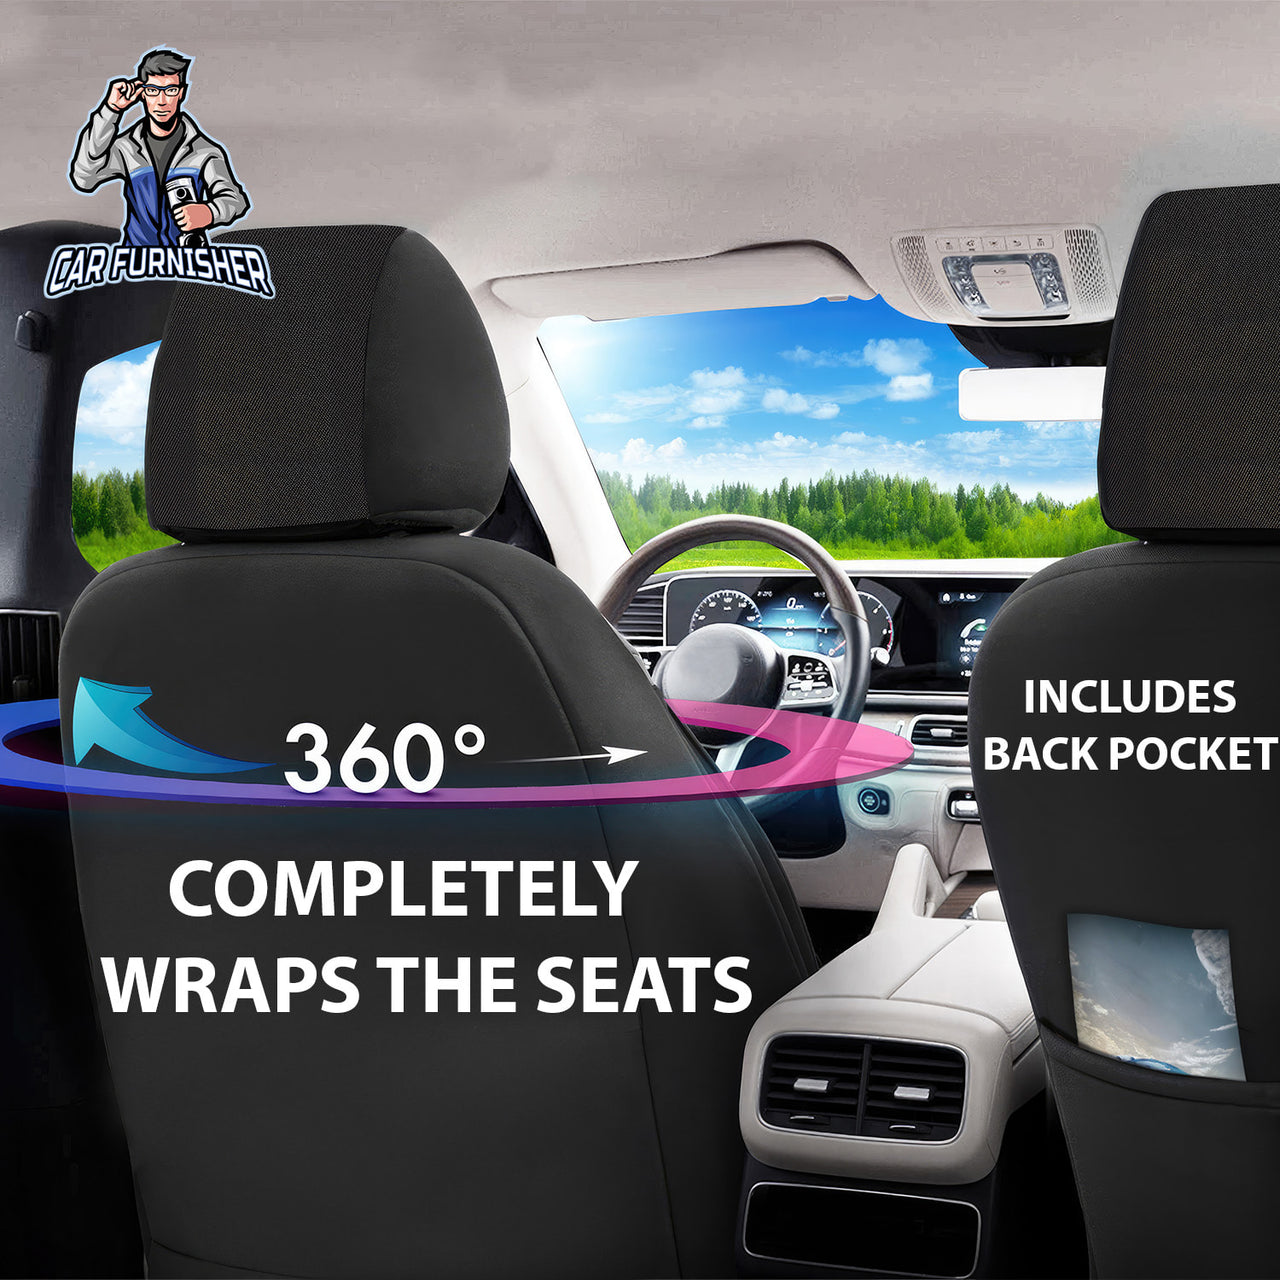 Car Seat Cover Set - Verita Elegance Design Gray 5 Seats + Headrests (Full Set) Leather & Linen Fabric